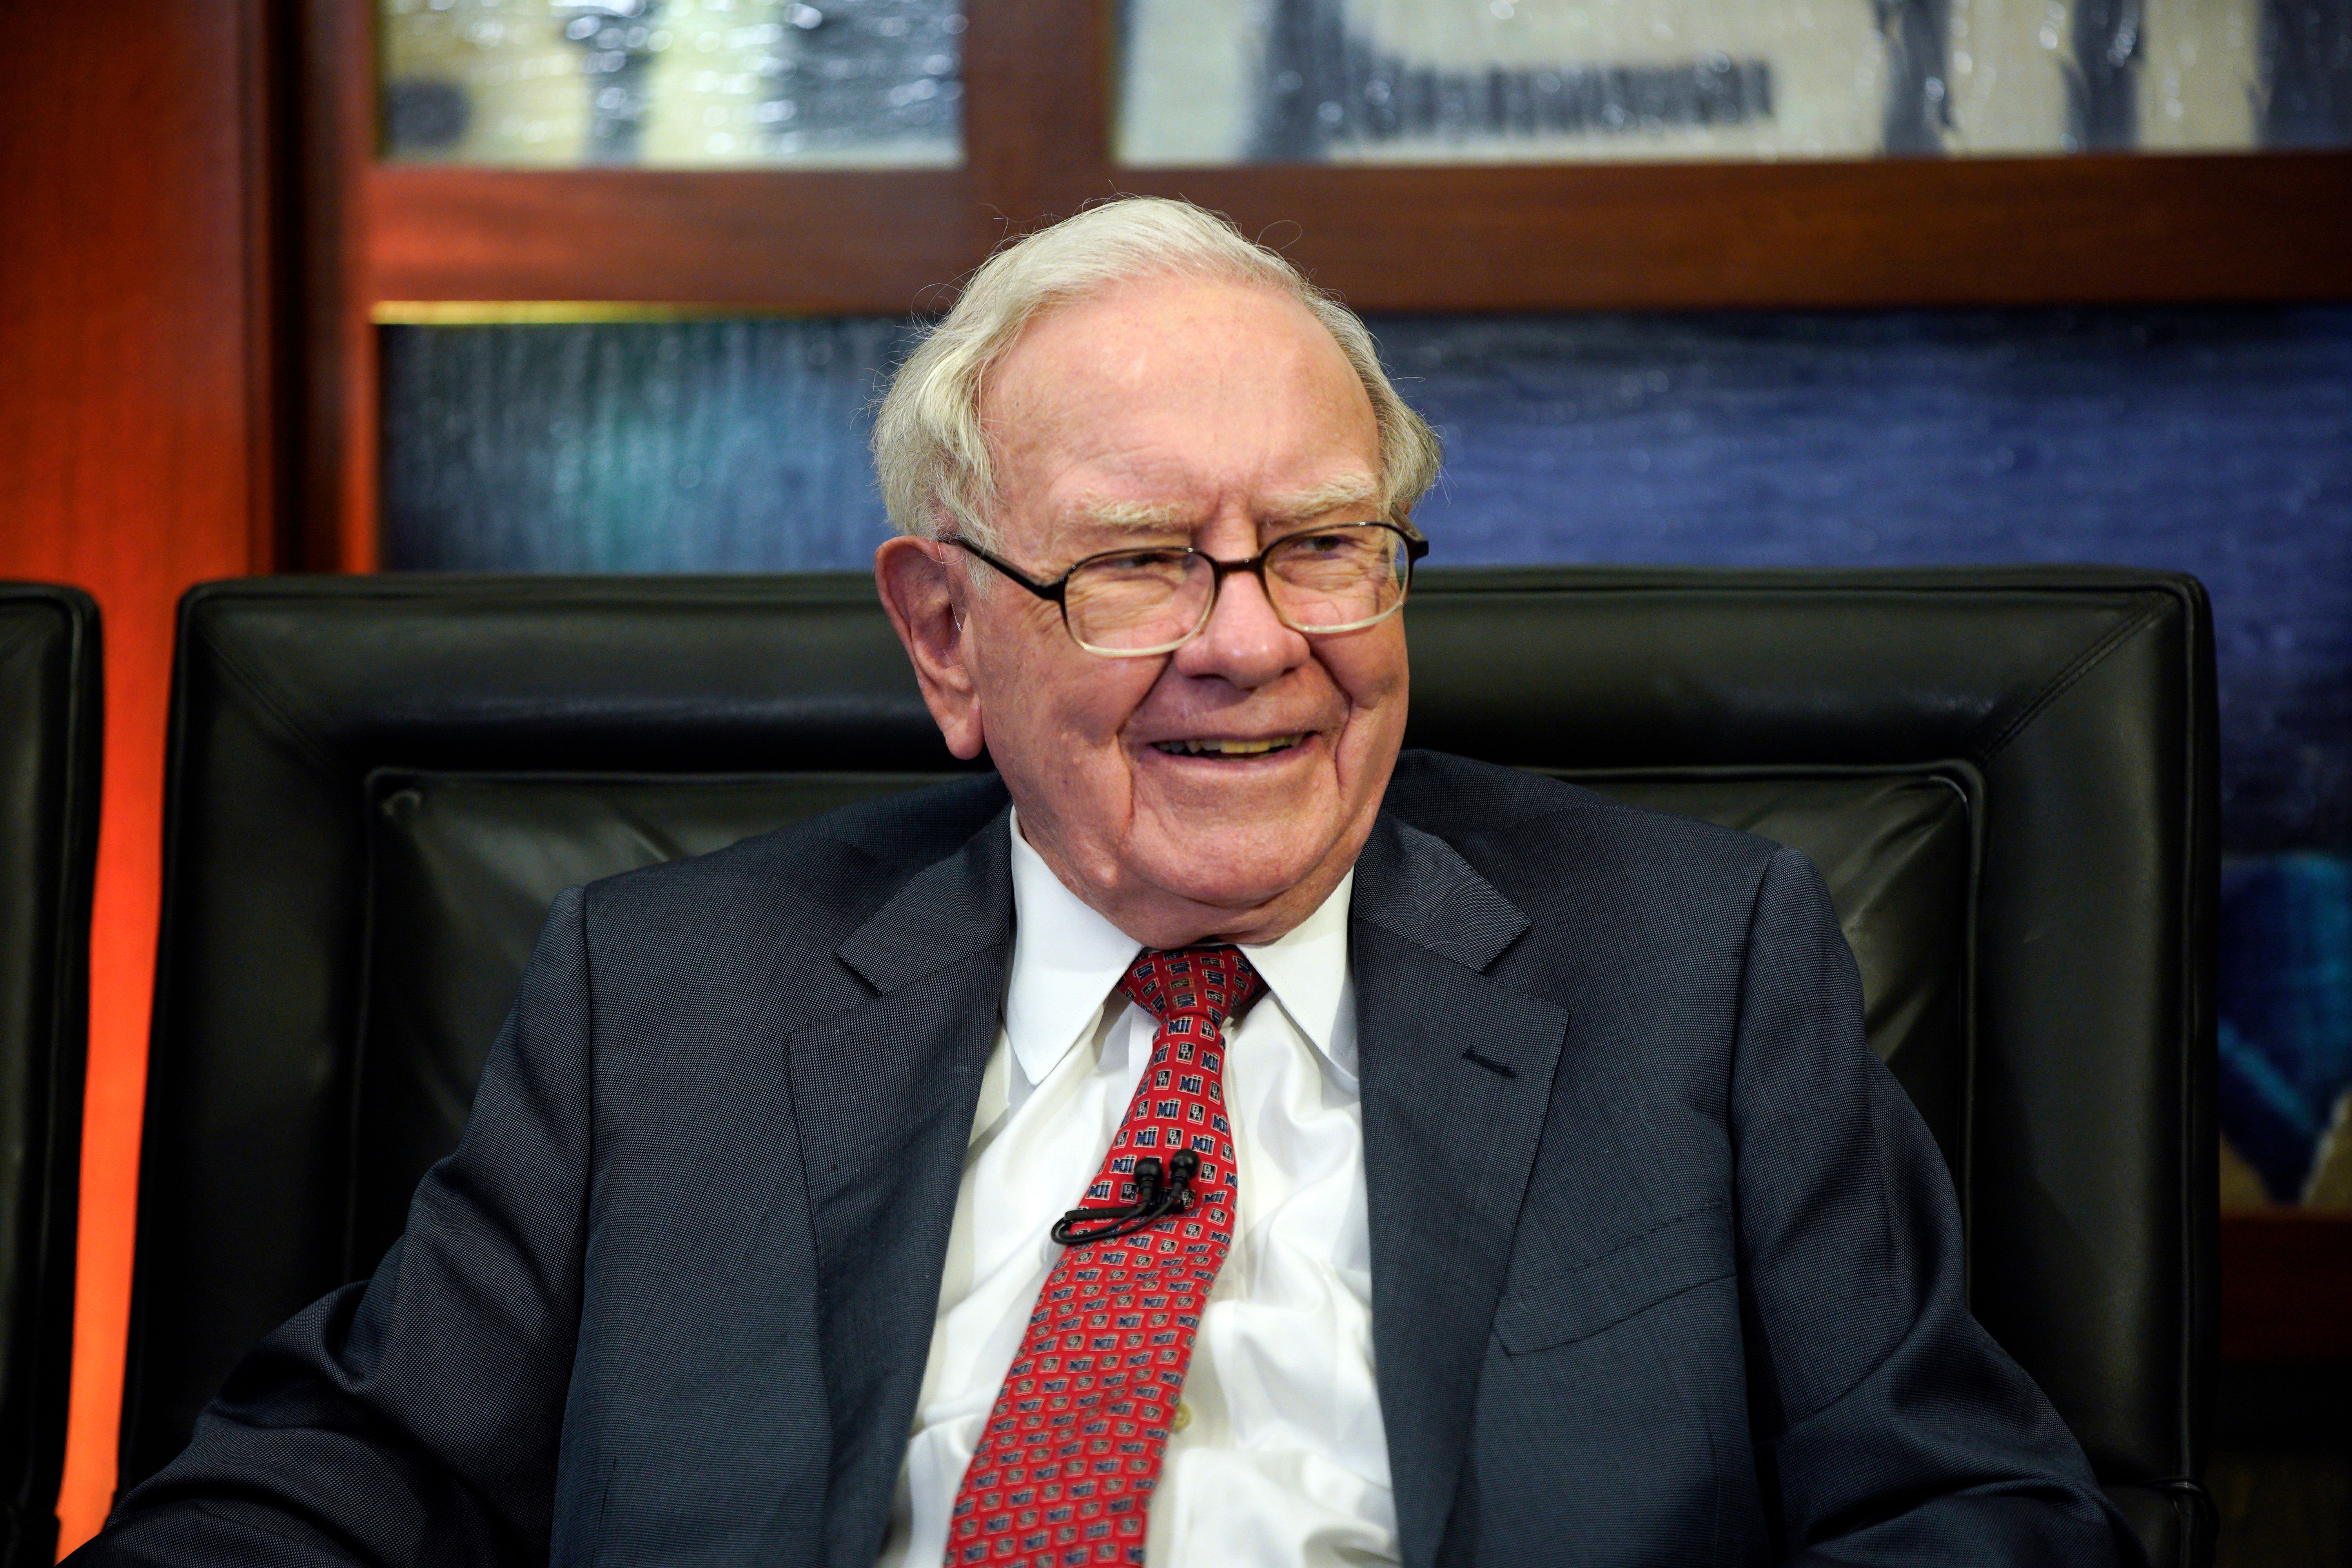 Profits at Warren Buffett's firm reach $36B as stocks surge and